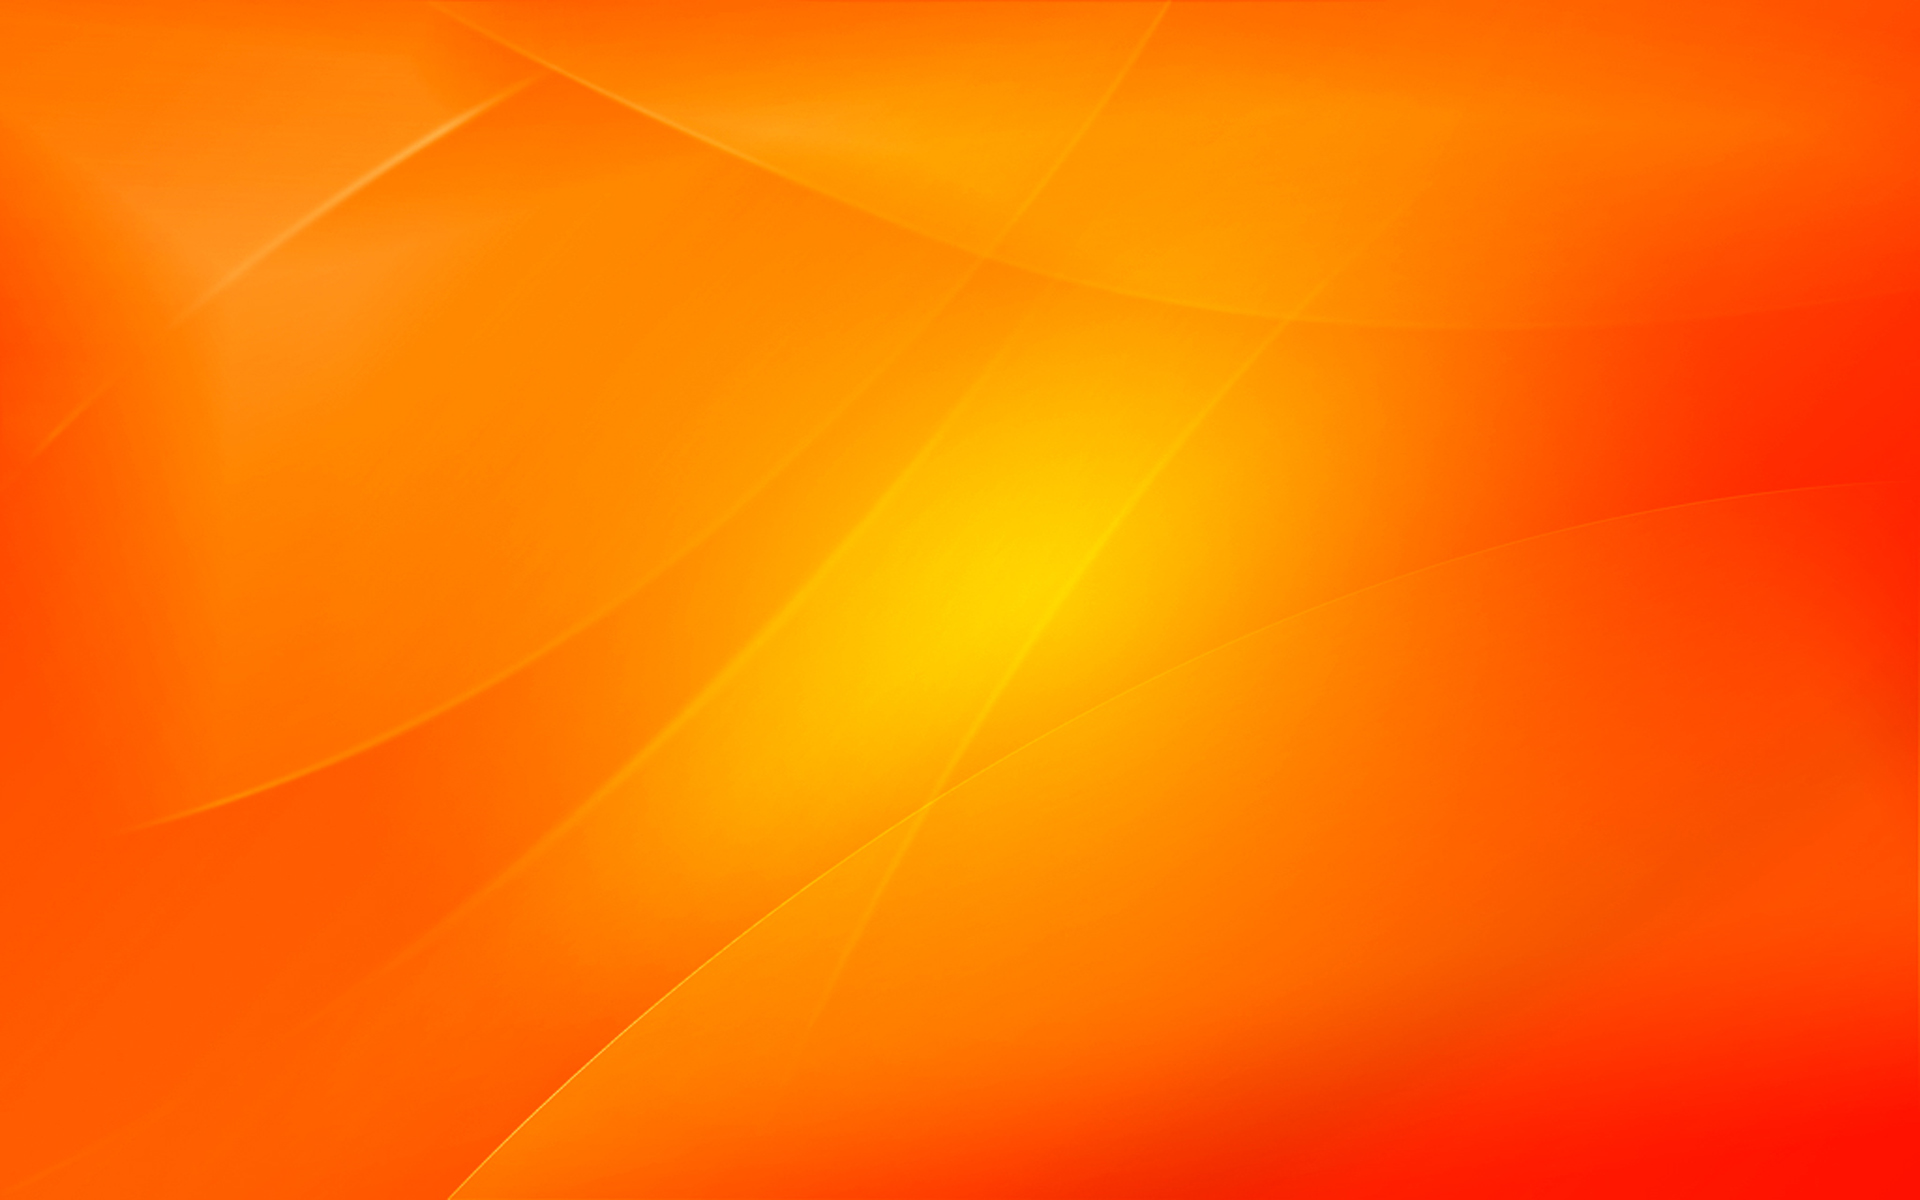 Cool Orange Background Designs Image Amp Pictures Becuo